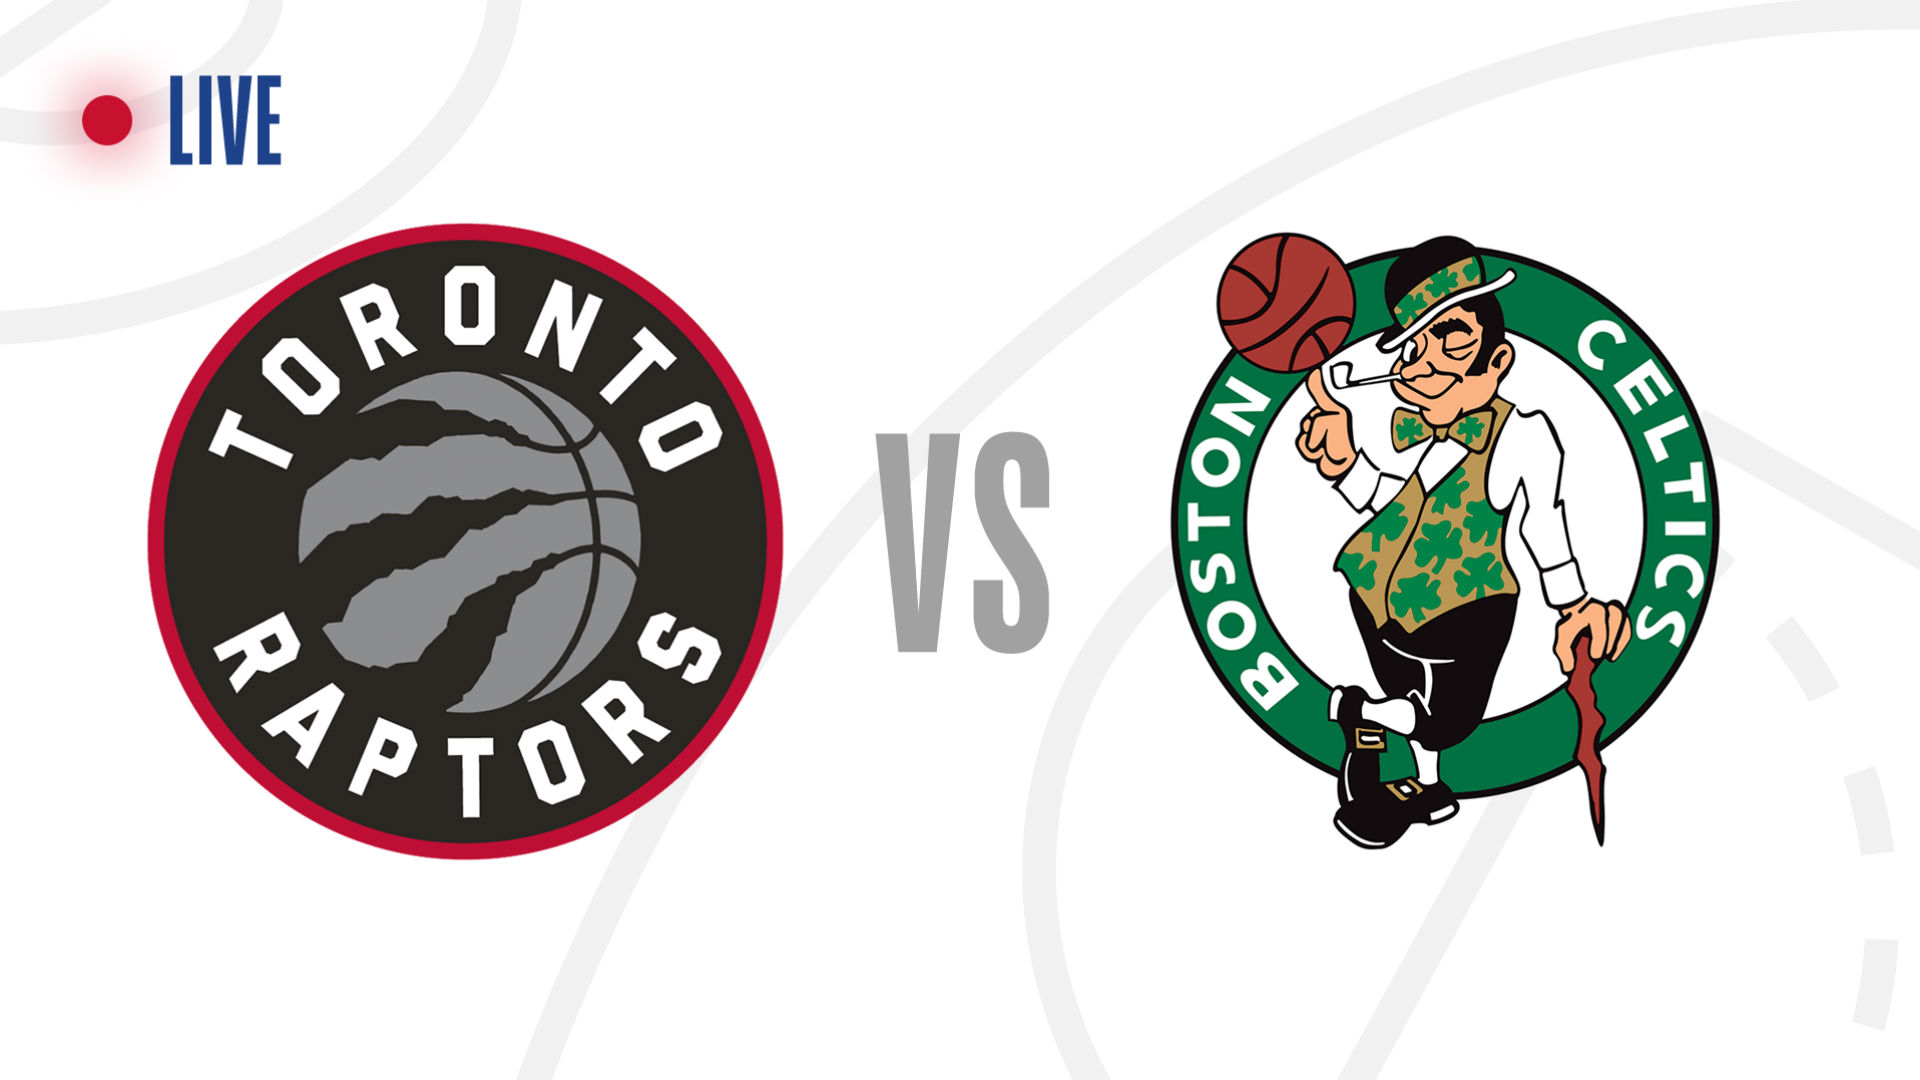 Toronto Raptors vs. Boston Celtics: Live updates, highlights, box score and more | NBA.com